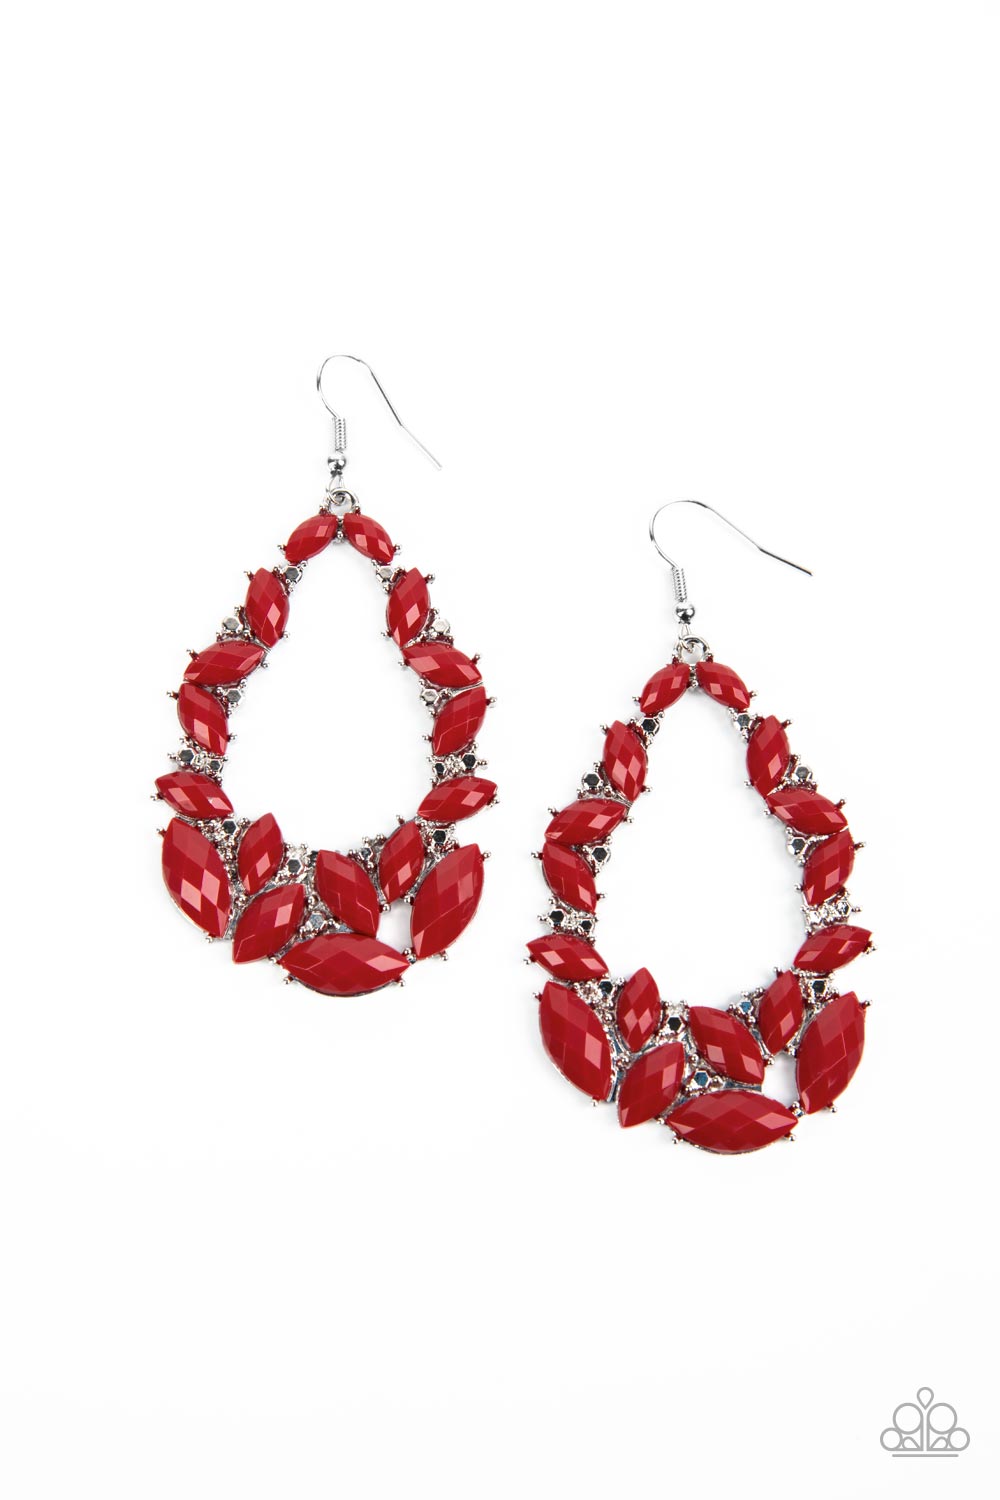 Tenacious Treasure - Red Earrings - Princess Glam Shop